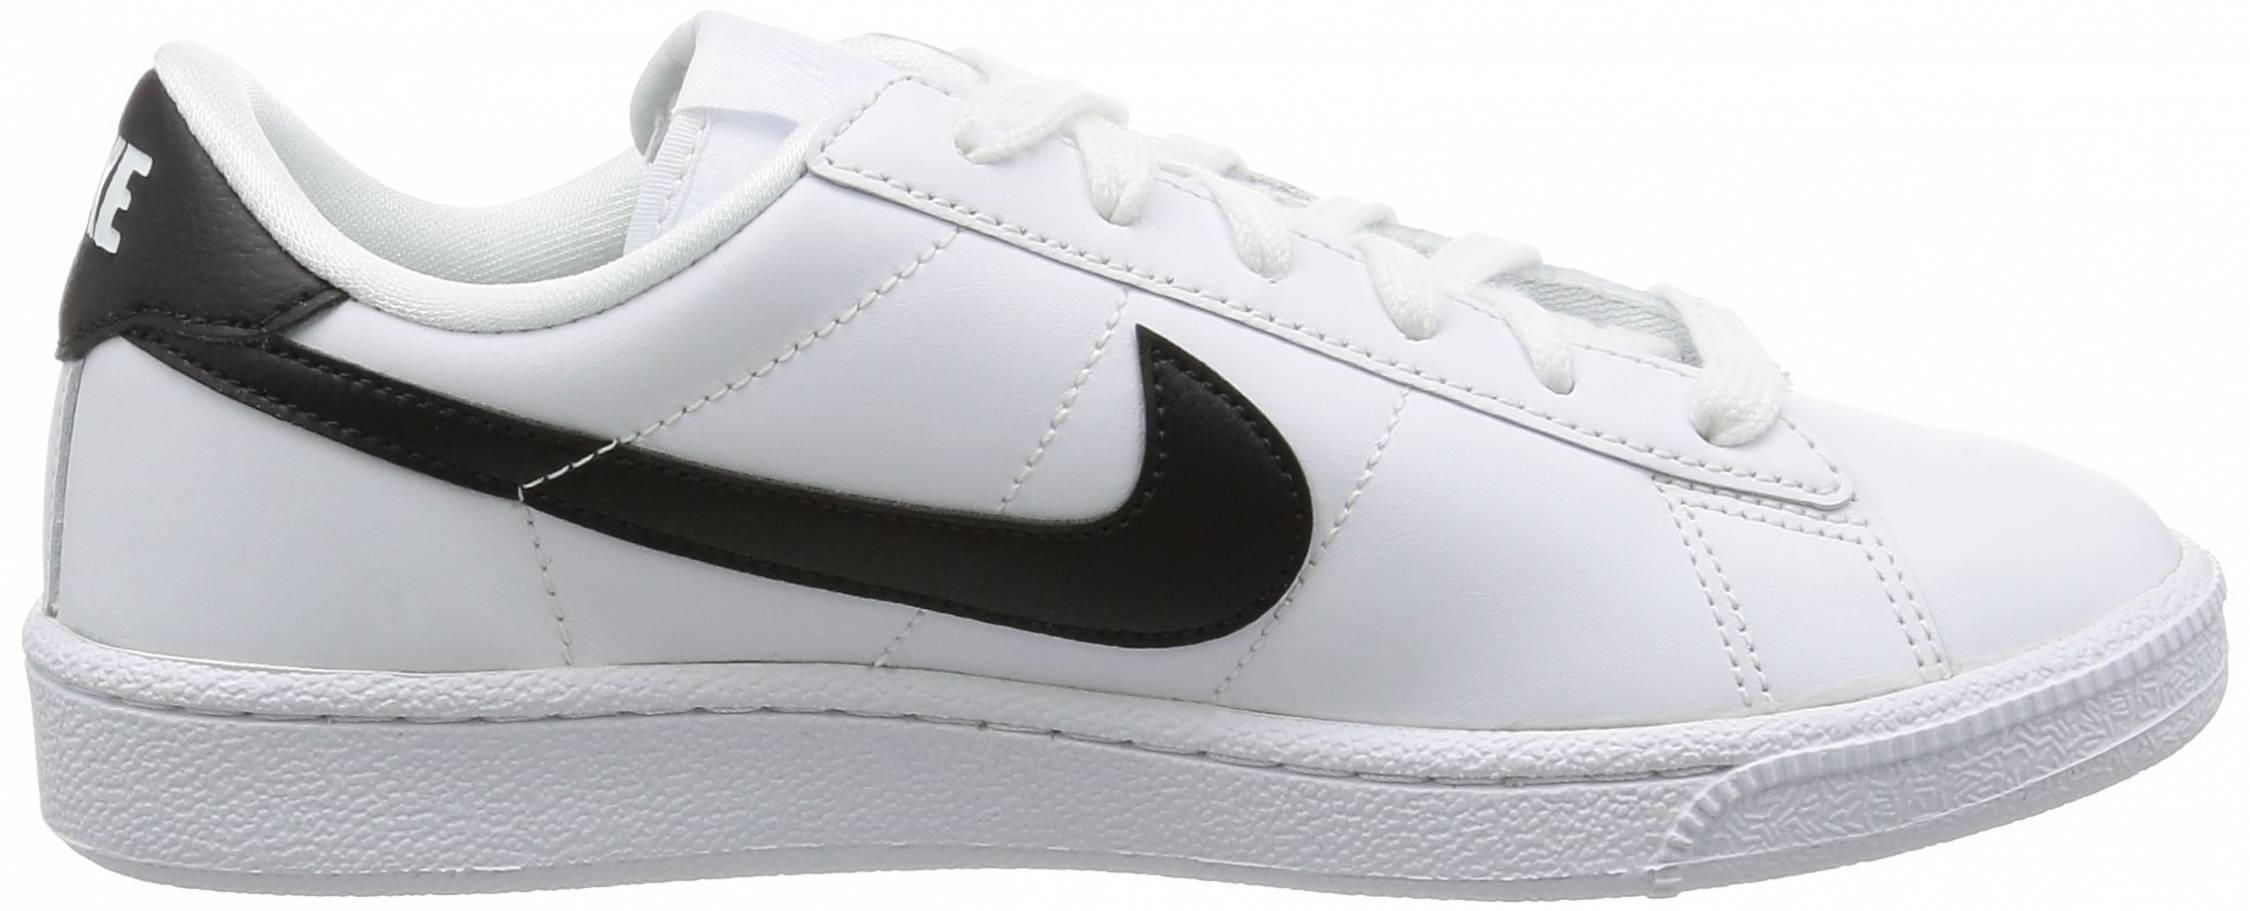 Nike Tennis Classic sneakers (only $46) | RunRepeat